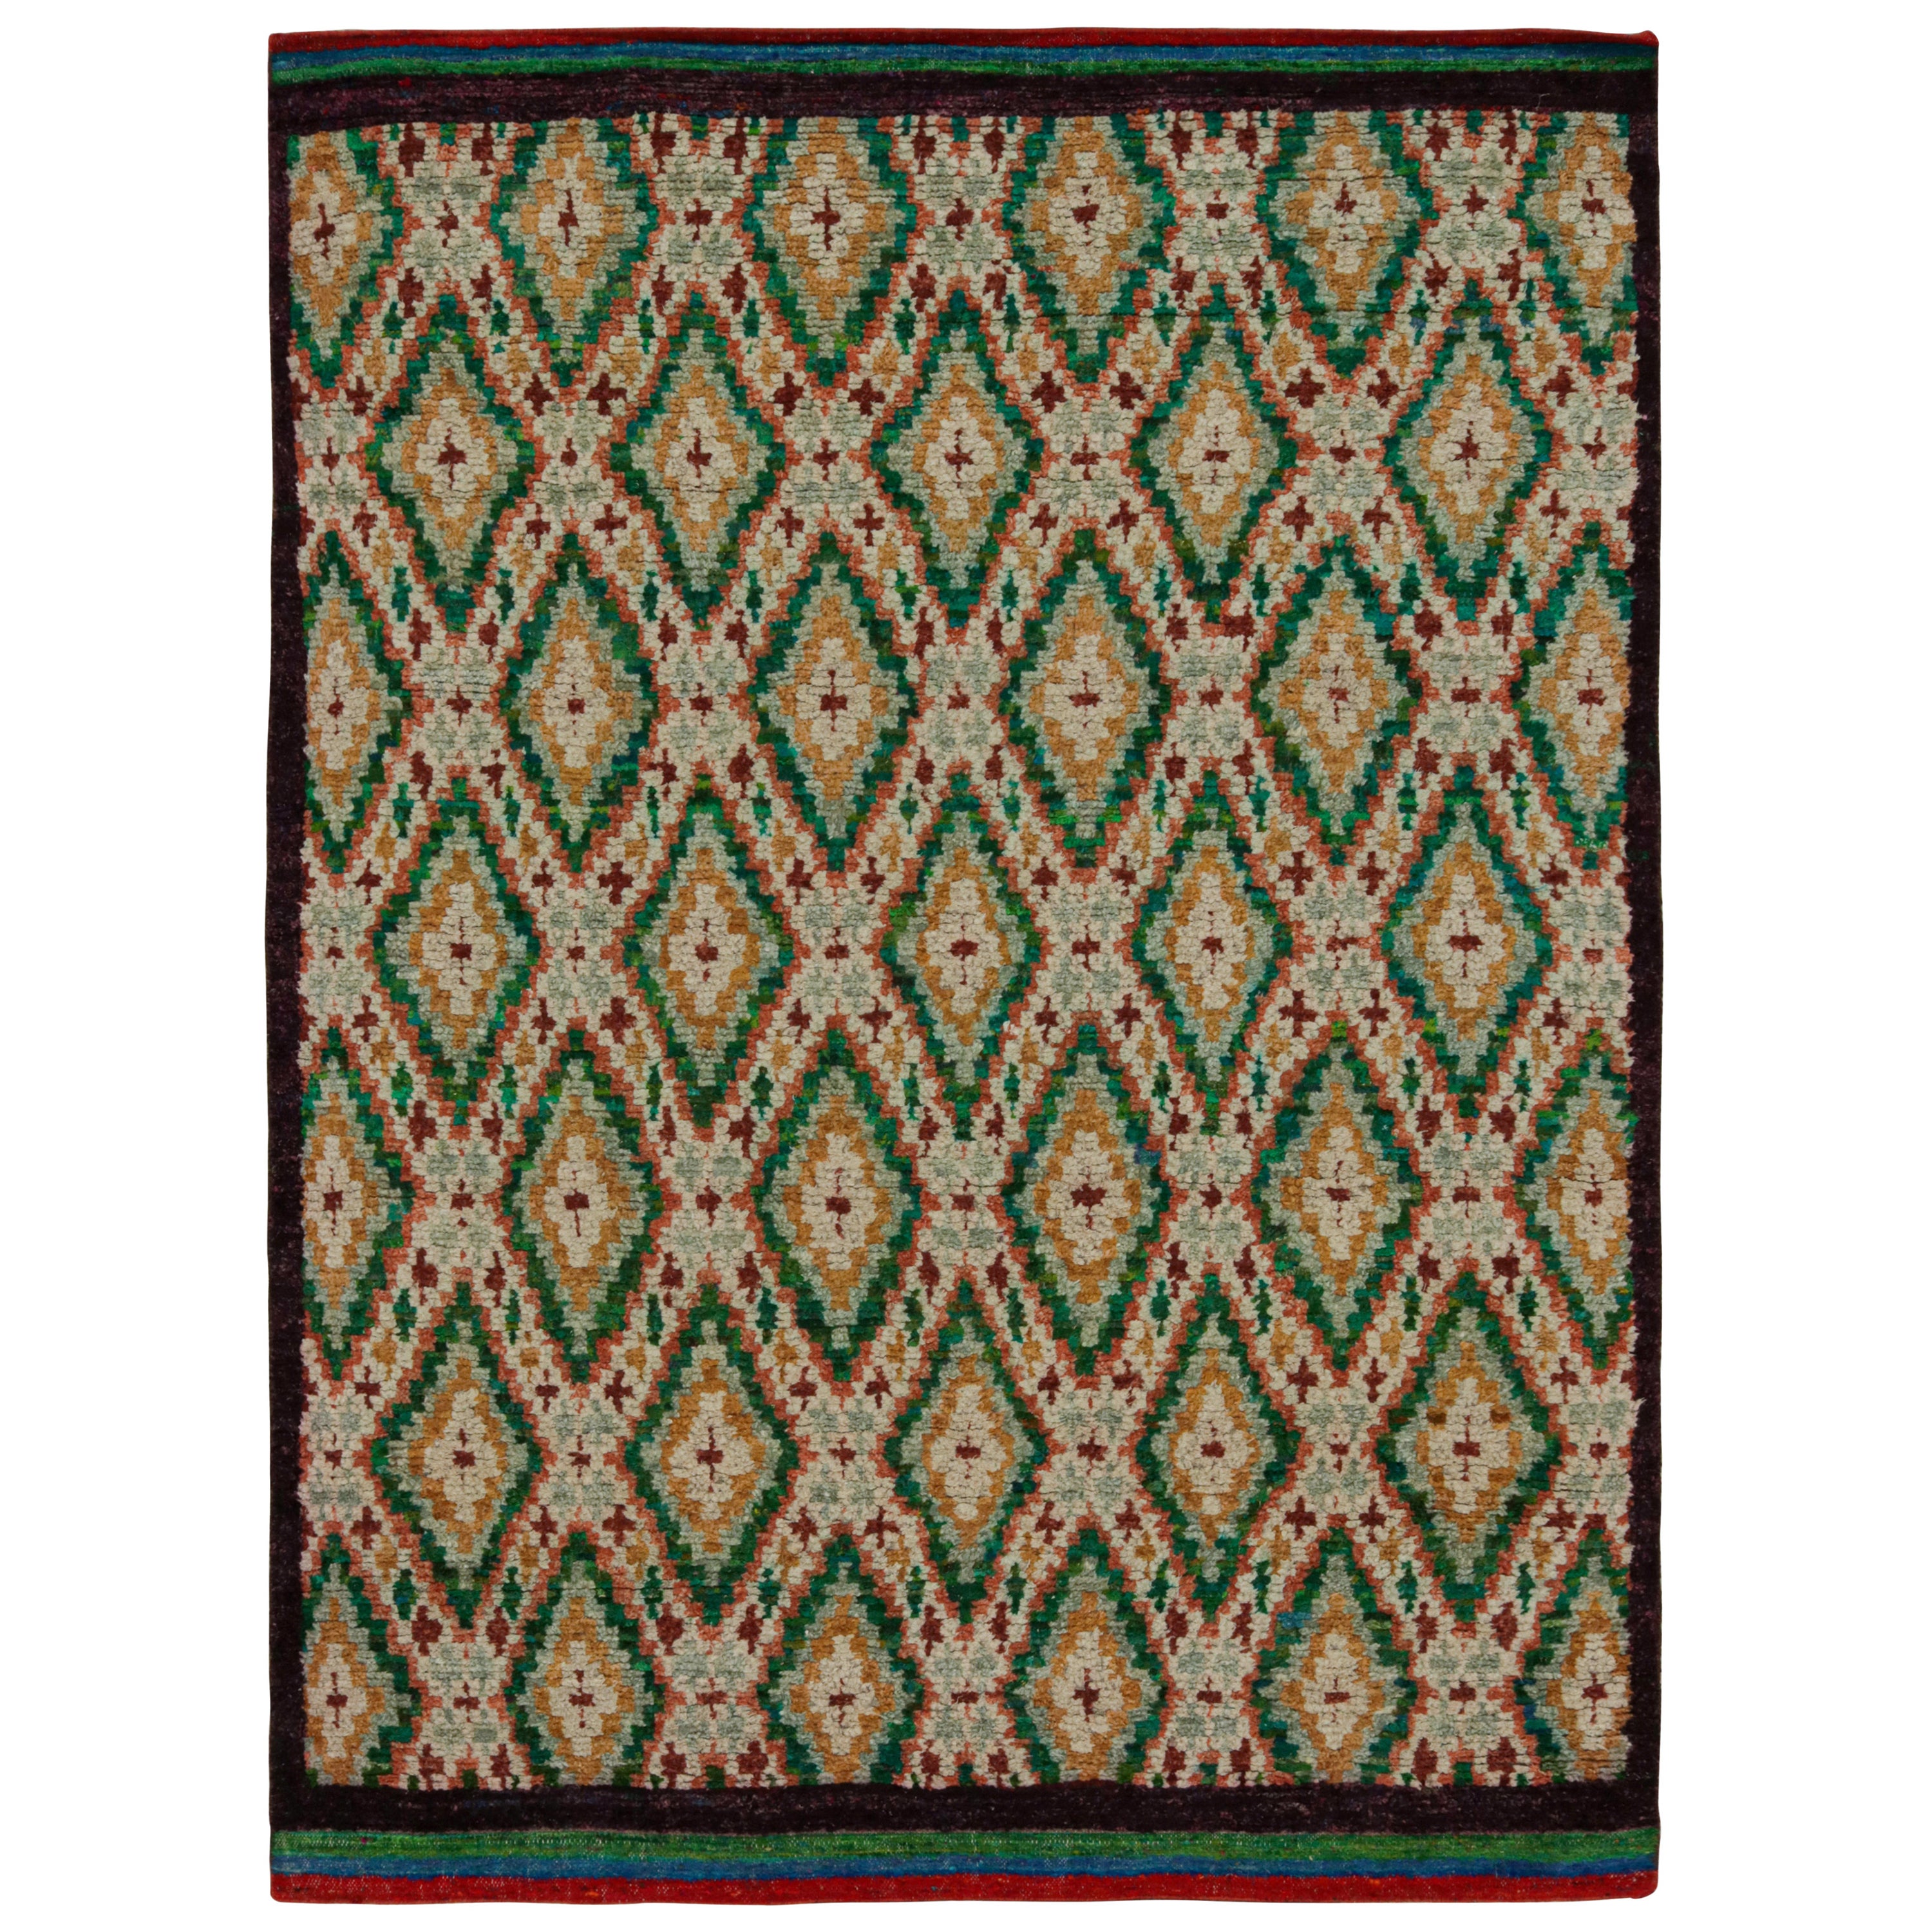 Rug & Kilim’s Modern Moroccan Style Rug in Green & Gold Geometric Patterns